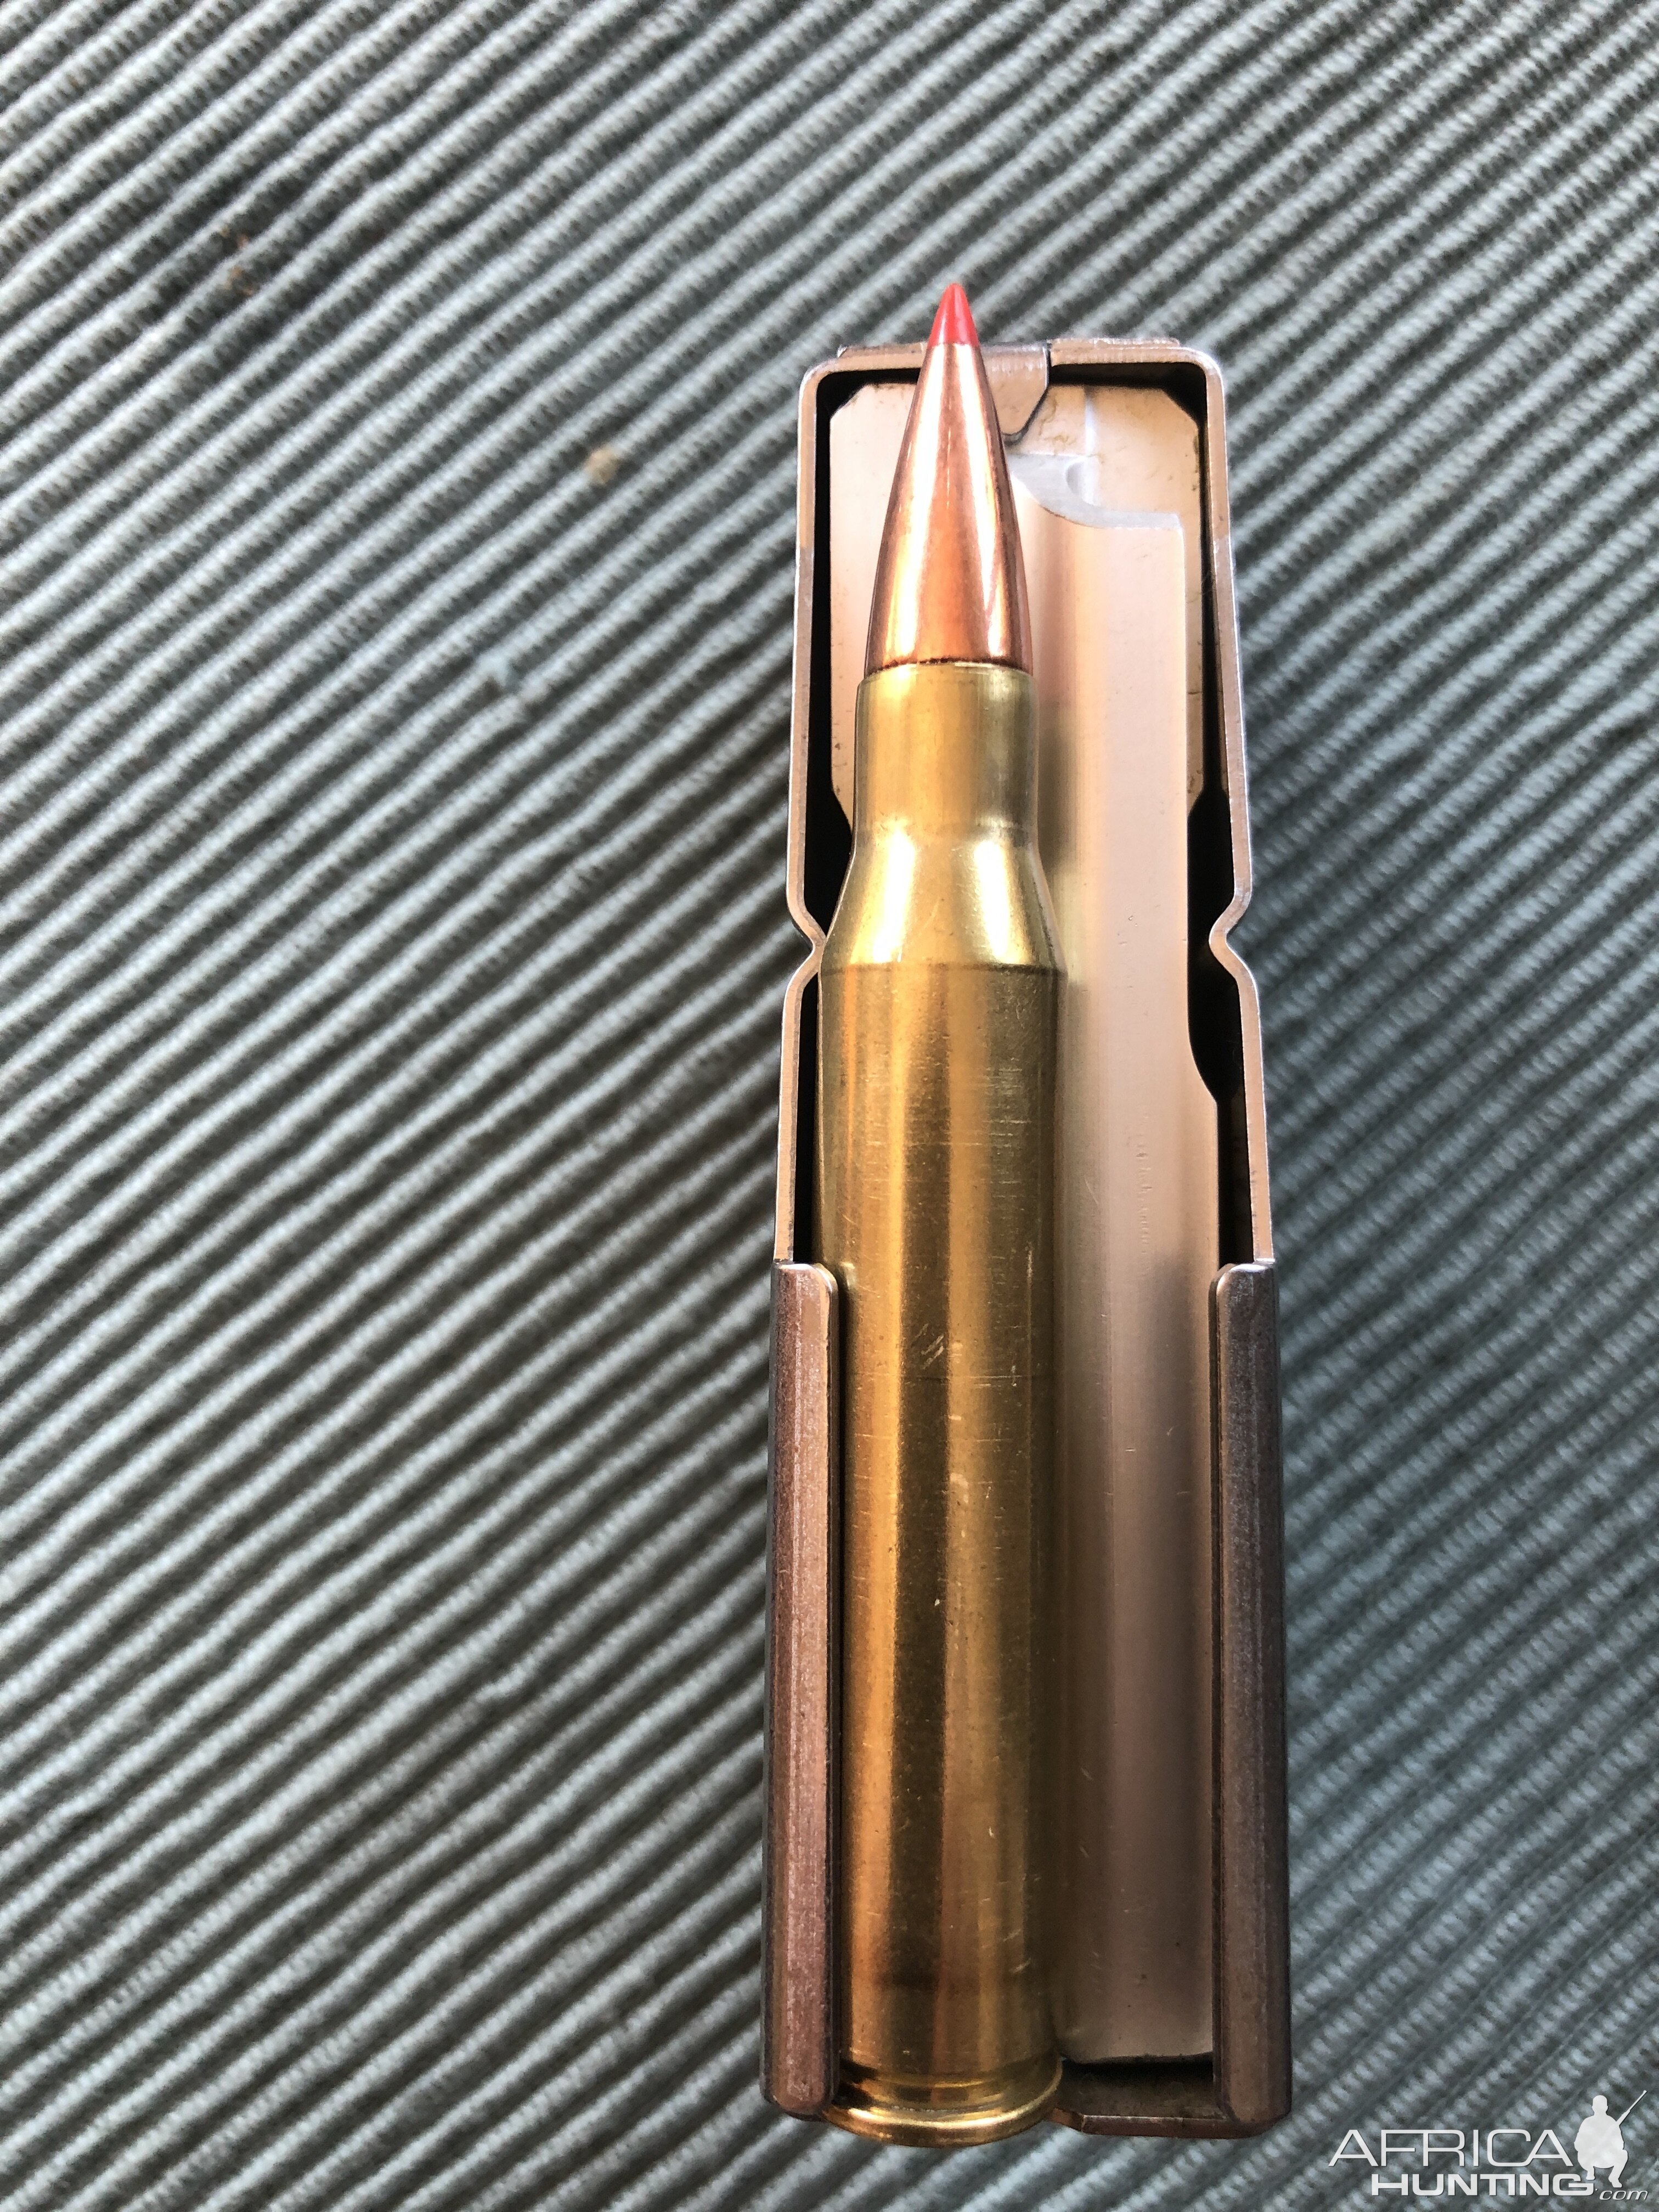 8x68s cartridge shown is with a 170gr Hornady SST @ 3.425"/87mm oal